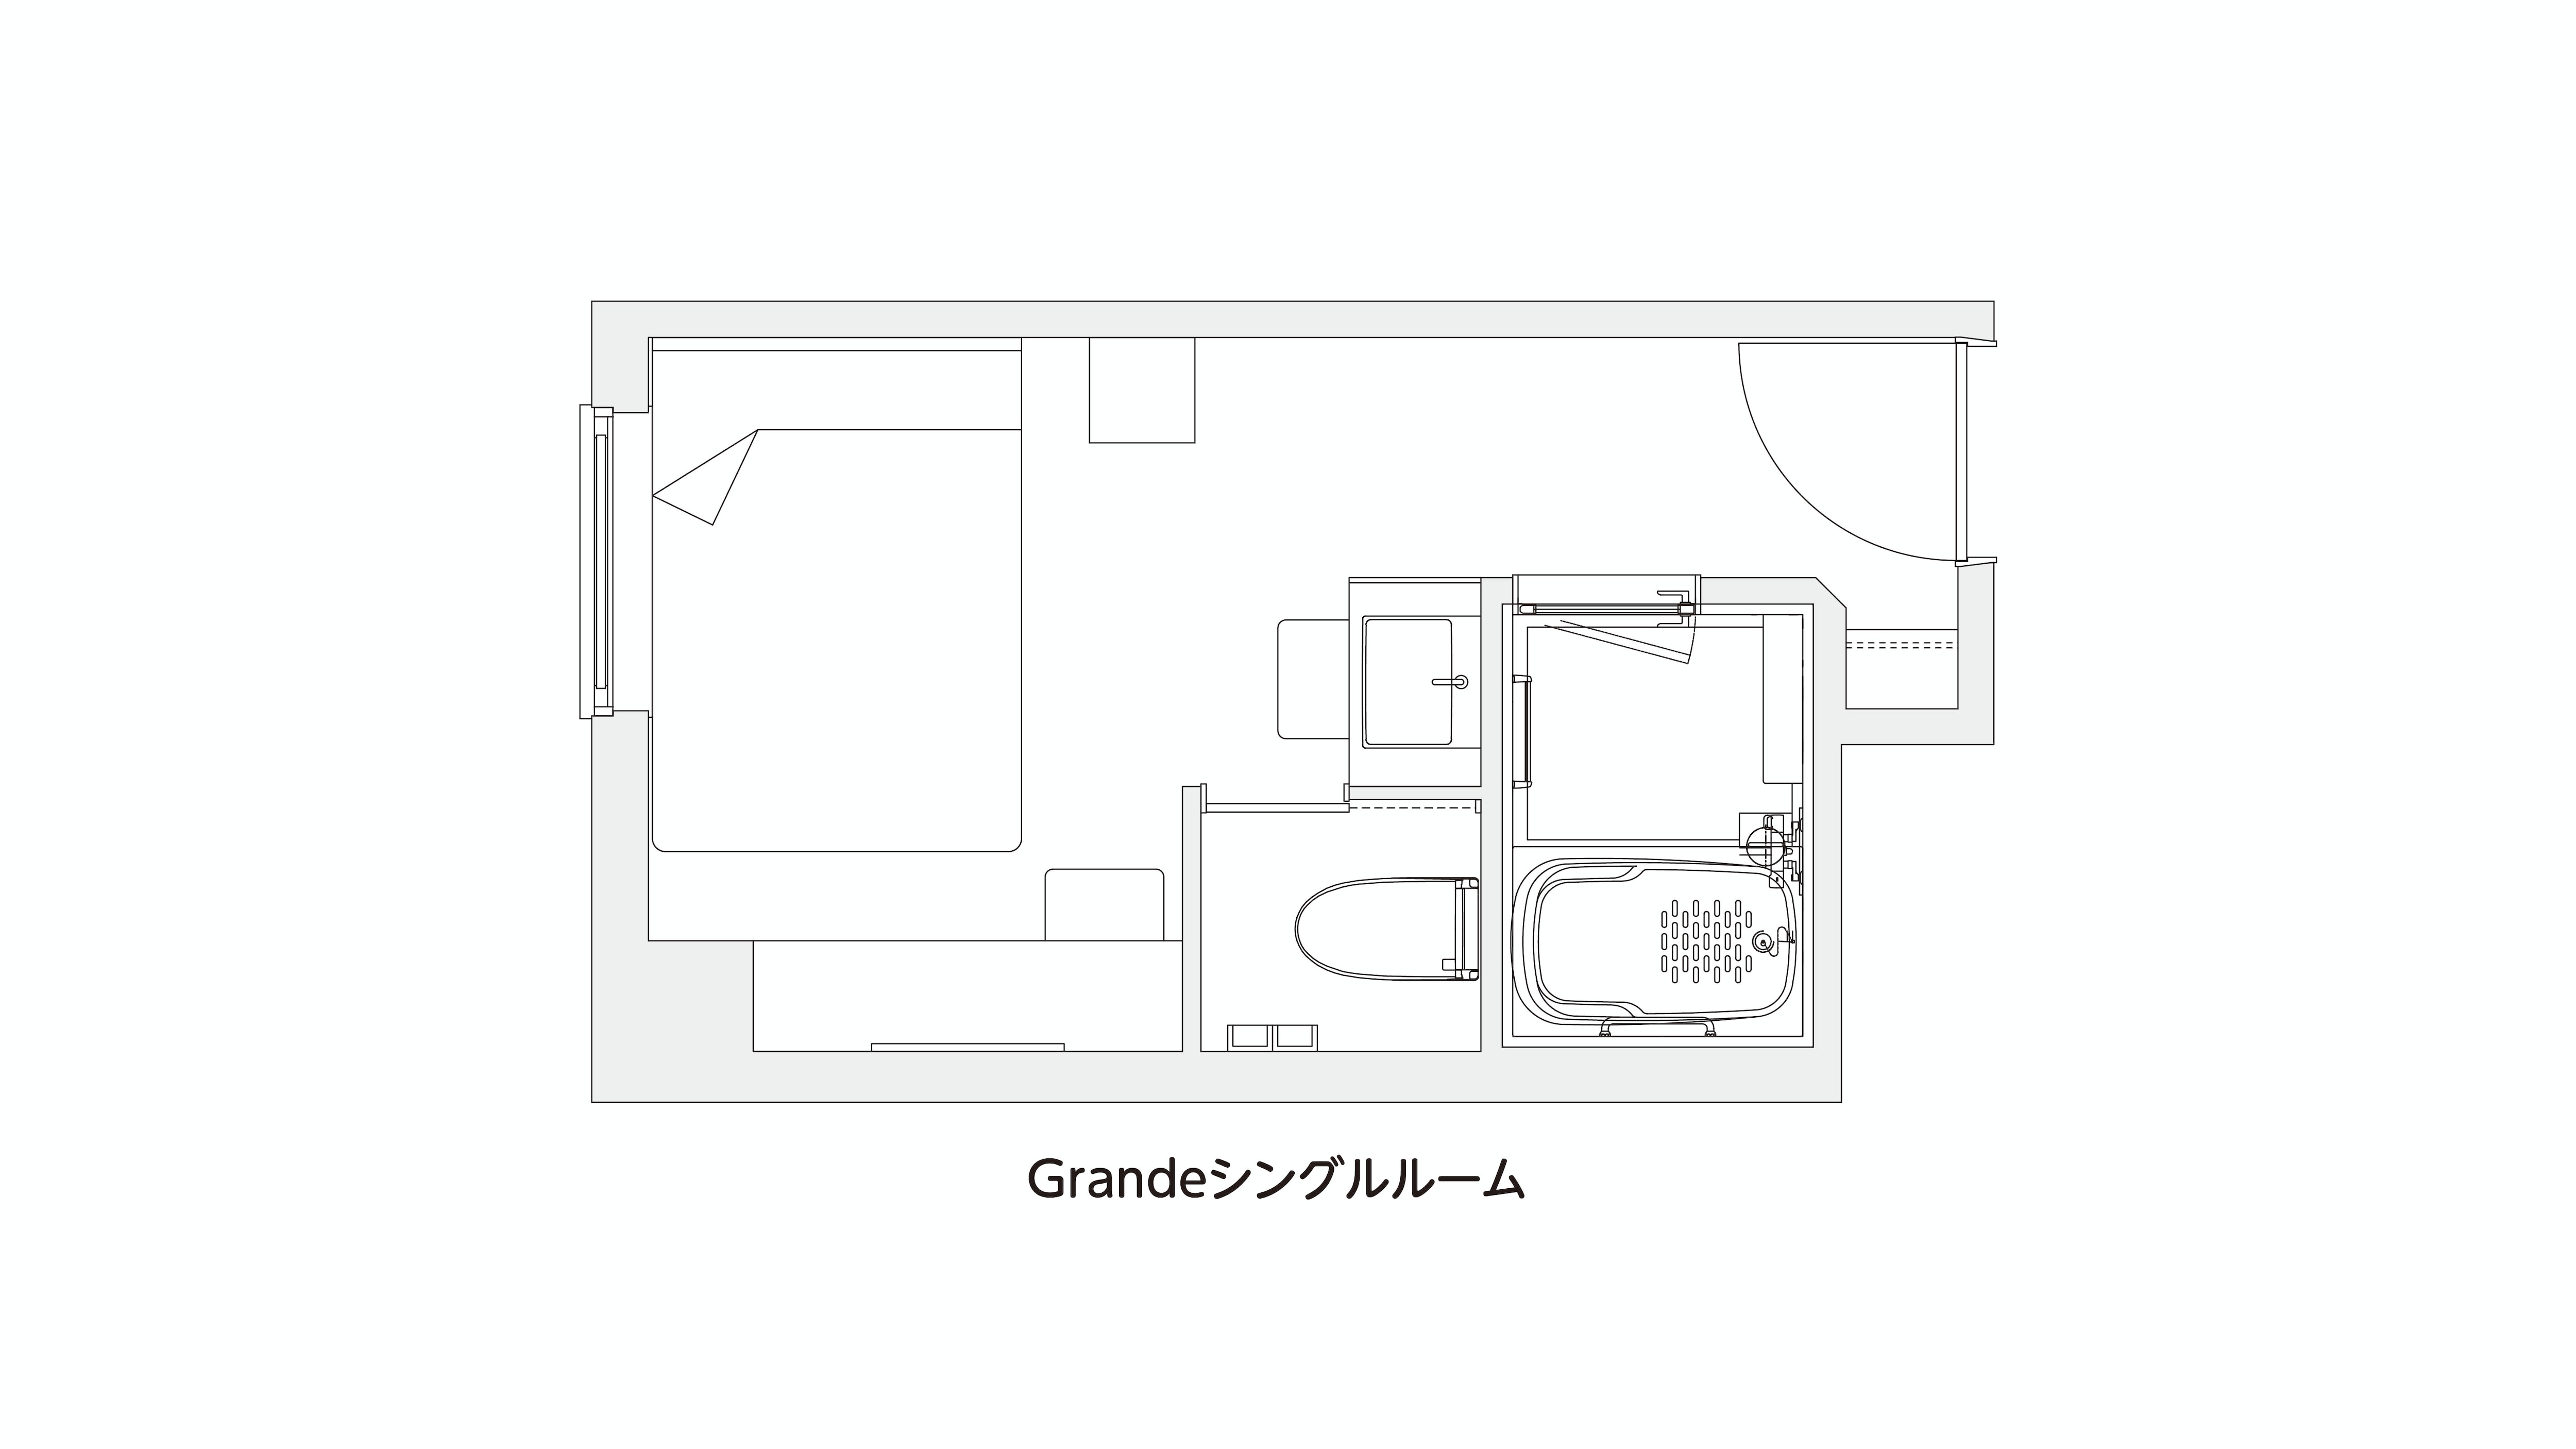 Grande Standard Room